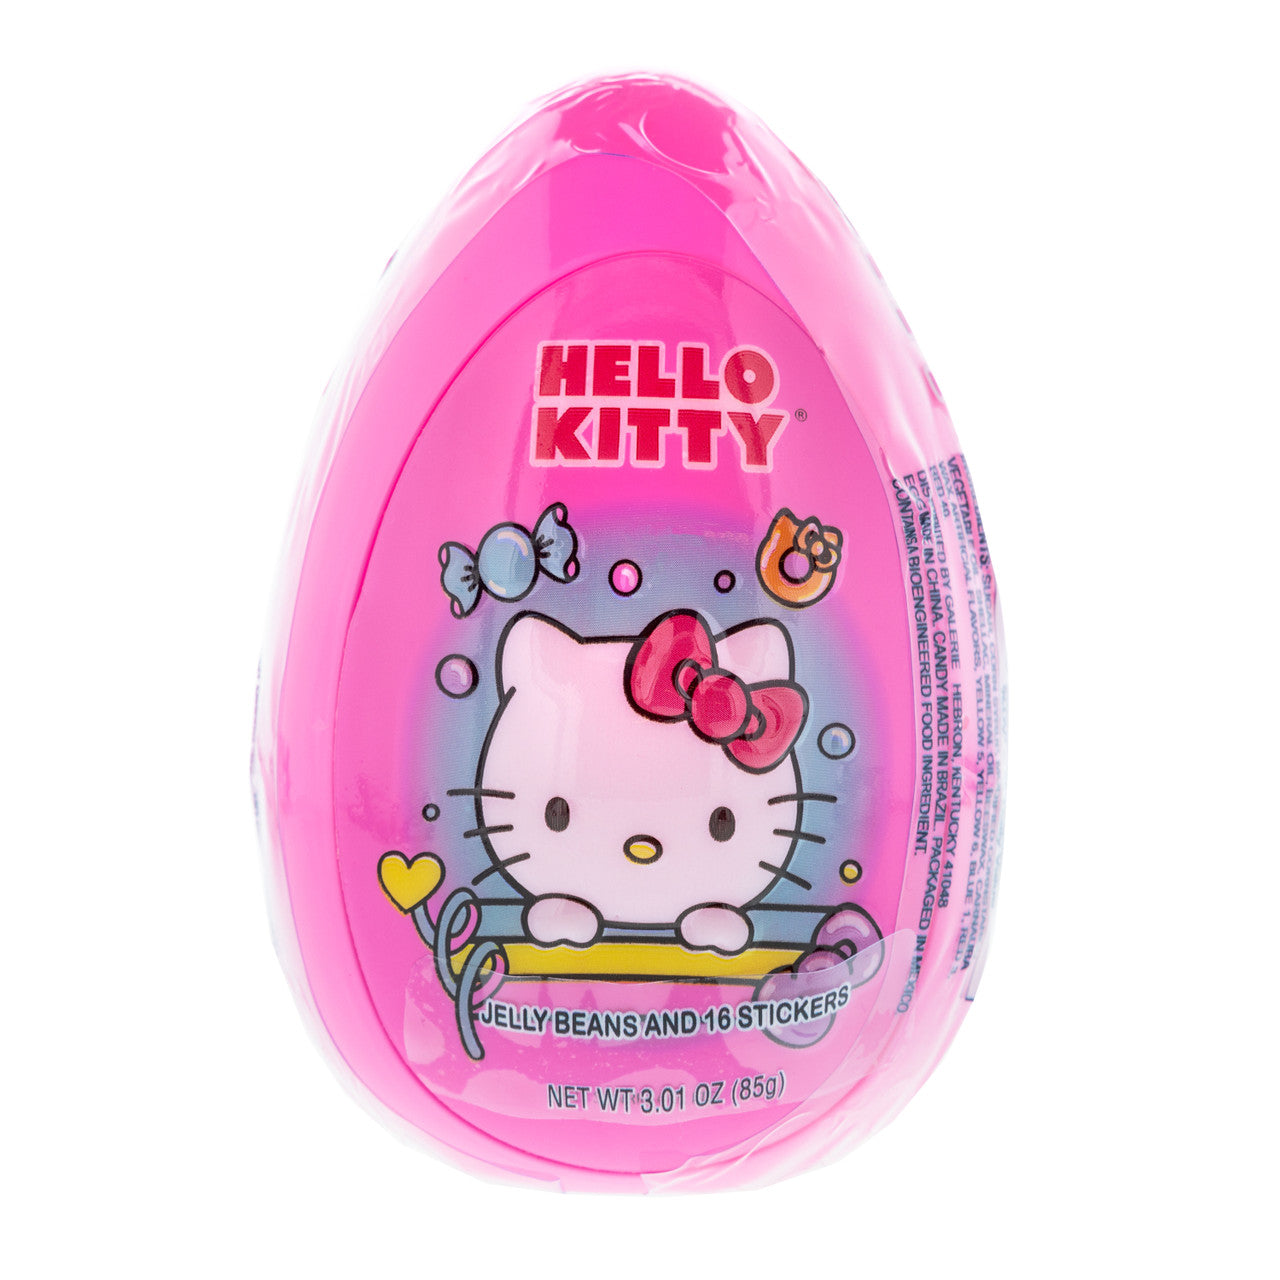 Hello Kitty Jumbo Surprise Egg 3.01oz – I Got Your Candy